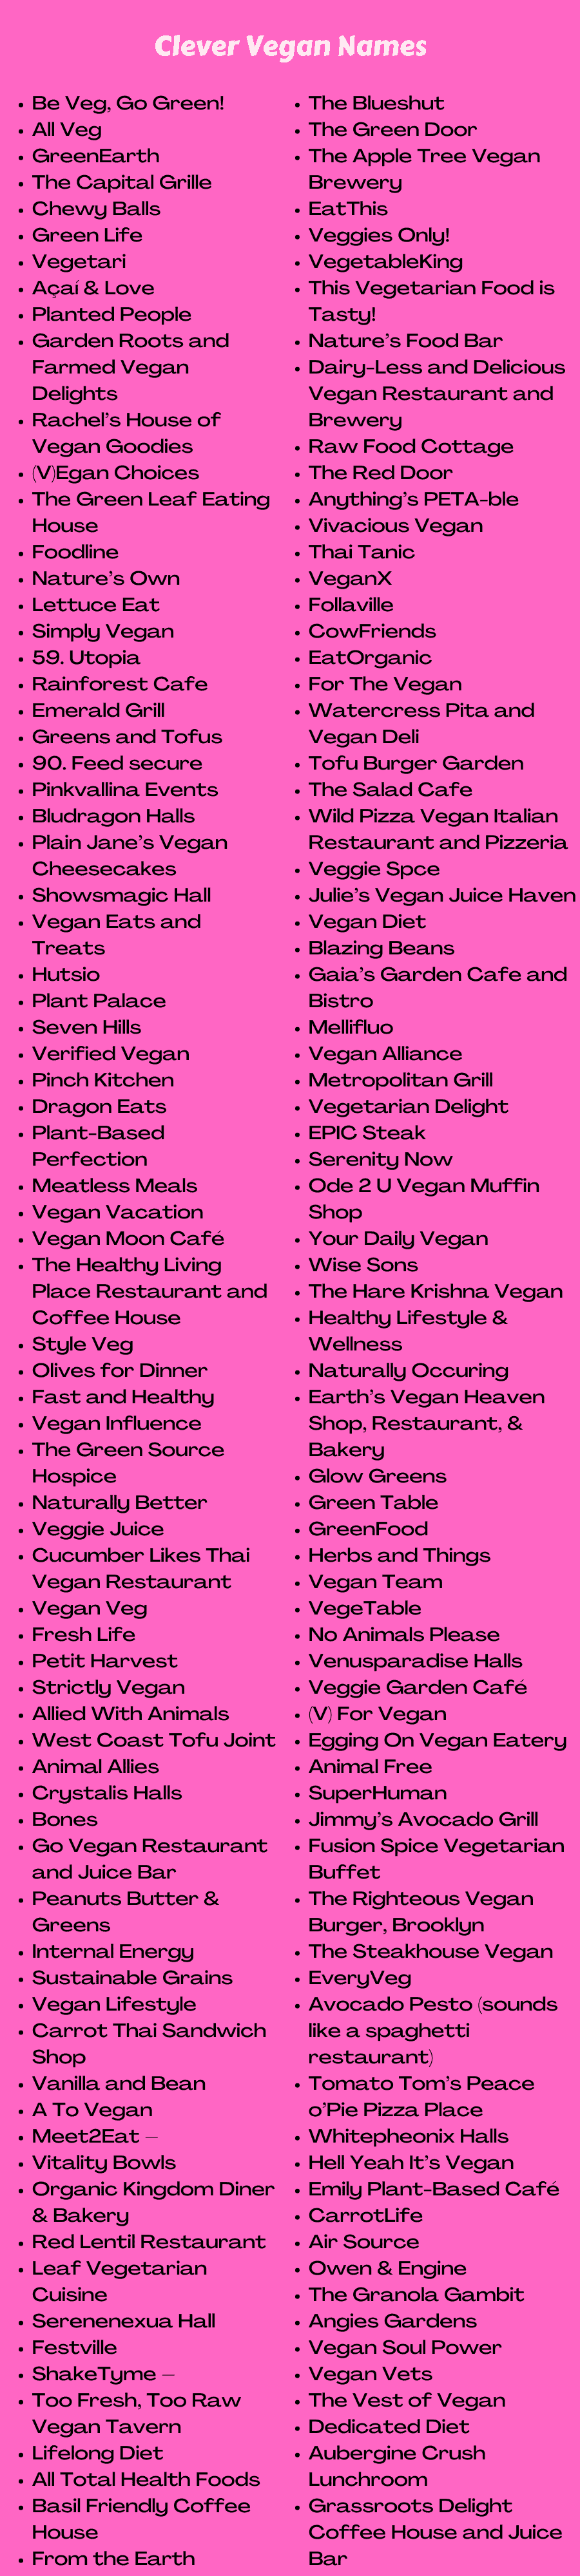 Clever Vegan Names  Vegan Food Names For Instagram - Name Ideas For Vegan Business